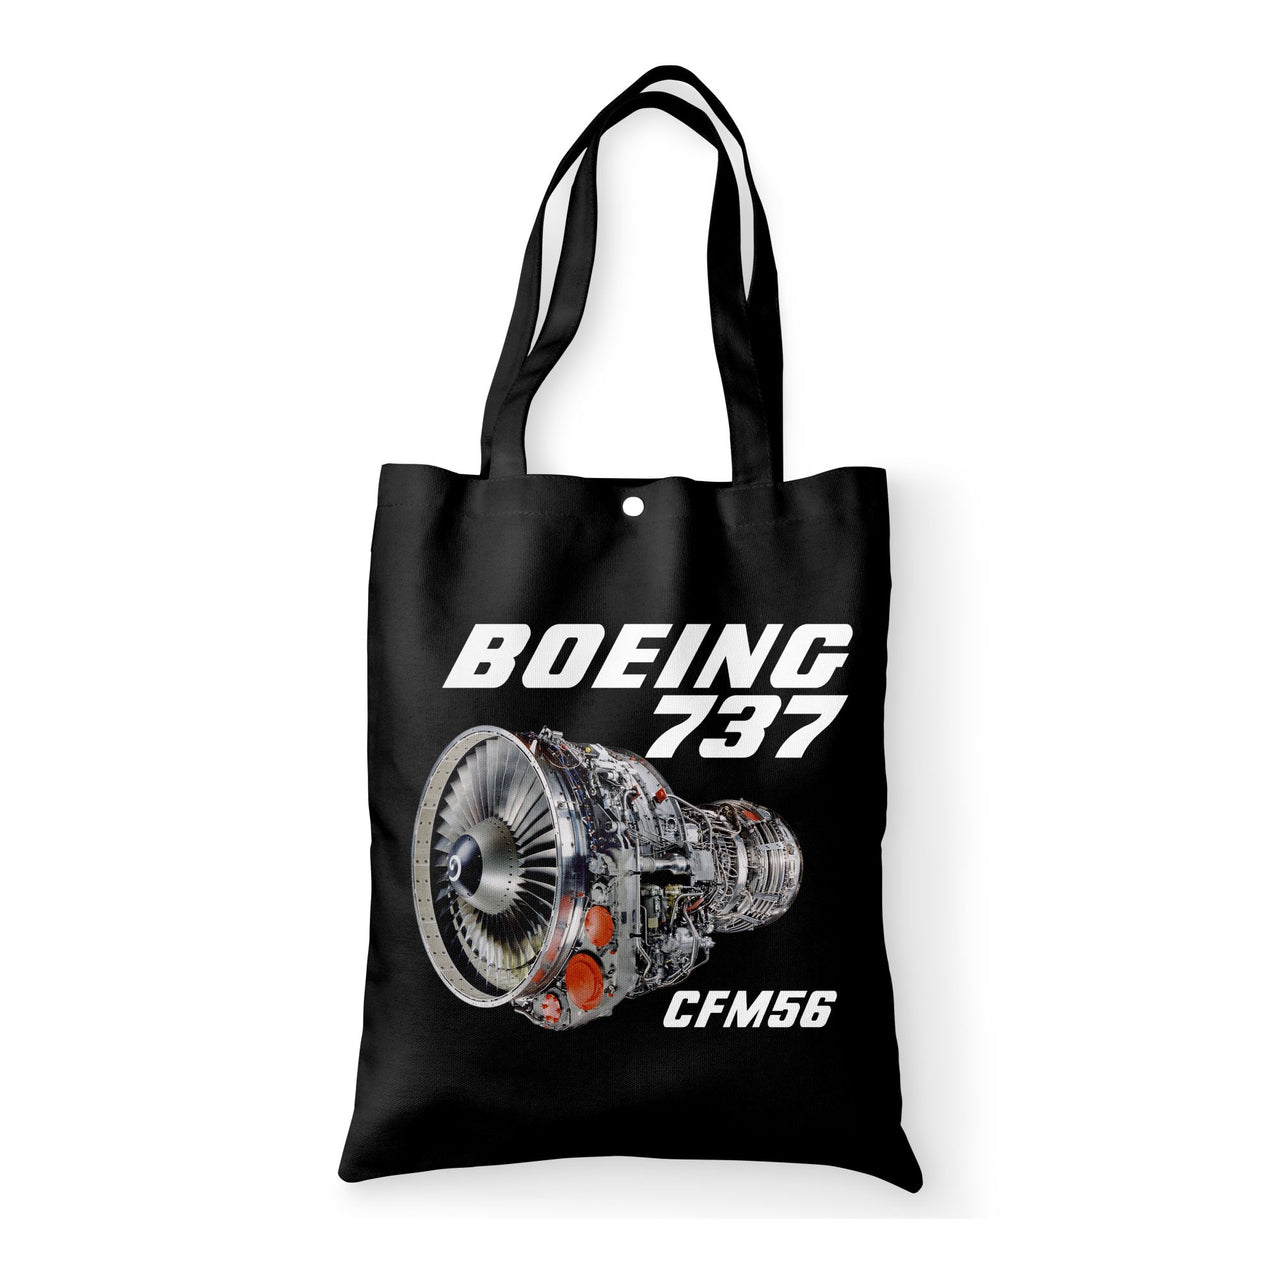 Boeing 737 Engine & CFM56 Designed Tote Bags